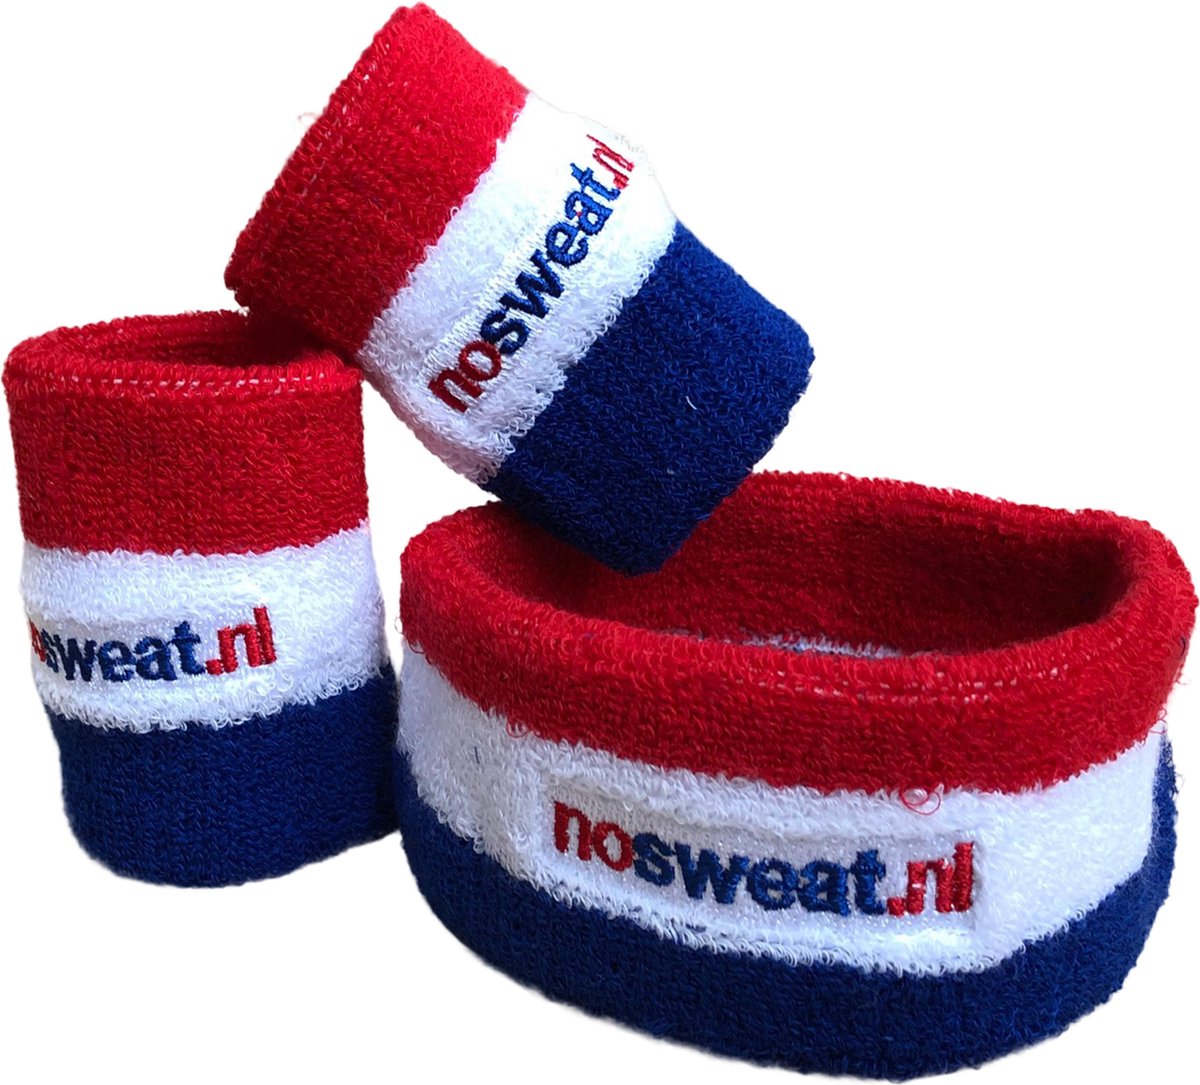 No Sweat zweetbandjes - rood-wit-blauw - één set bevat één hoofdband en twee polsbandjes.